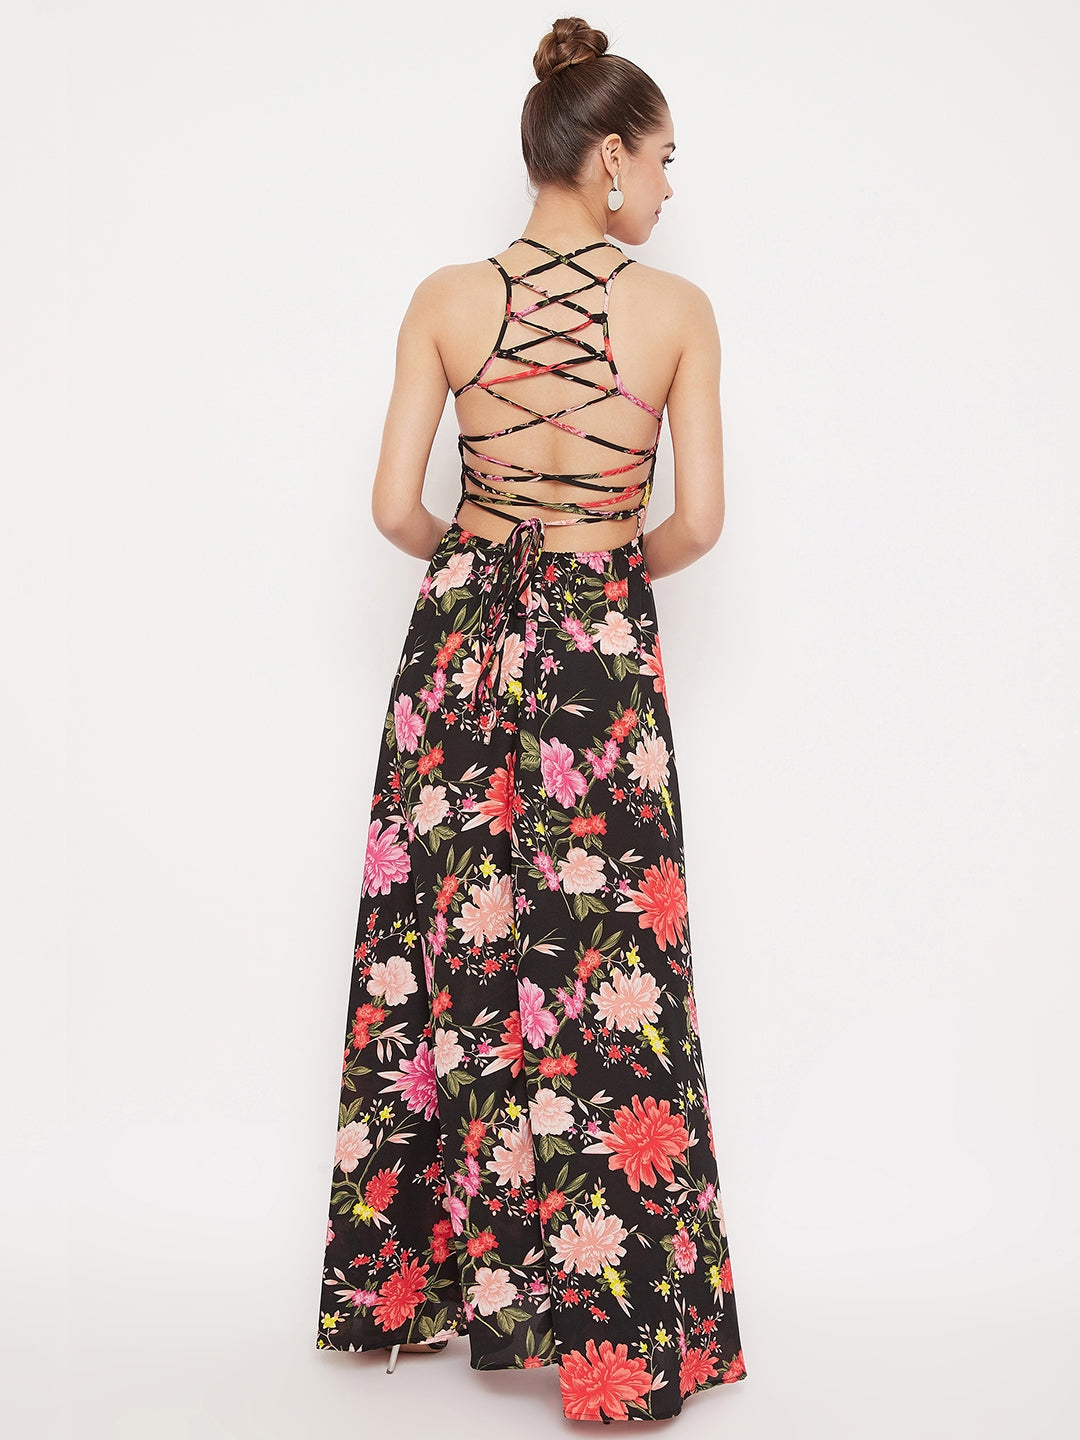 Berrylush Women Black Floral Printed Tie-Up Backless Maxi Dress